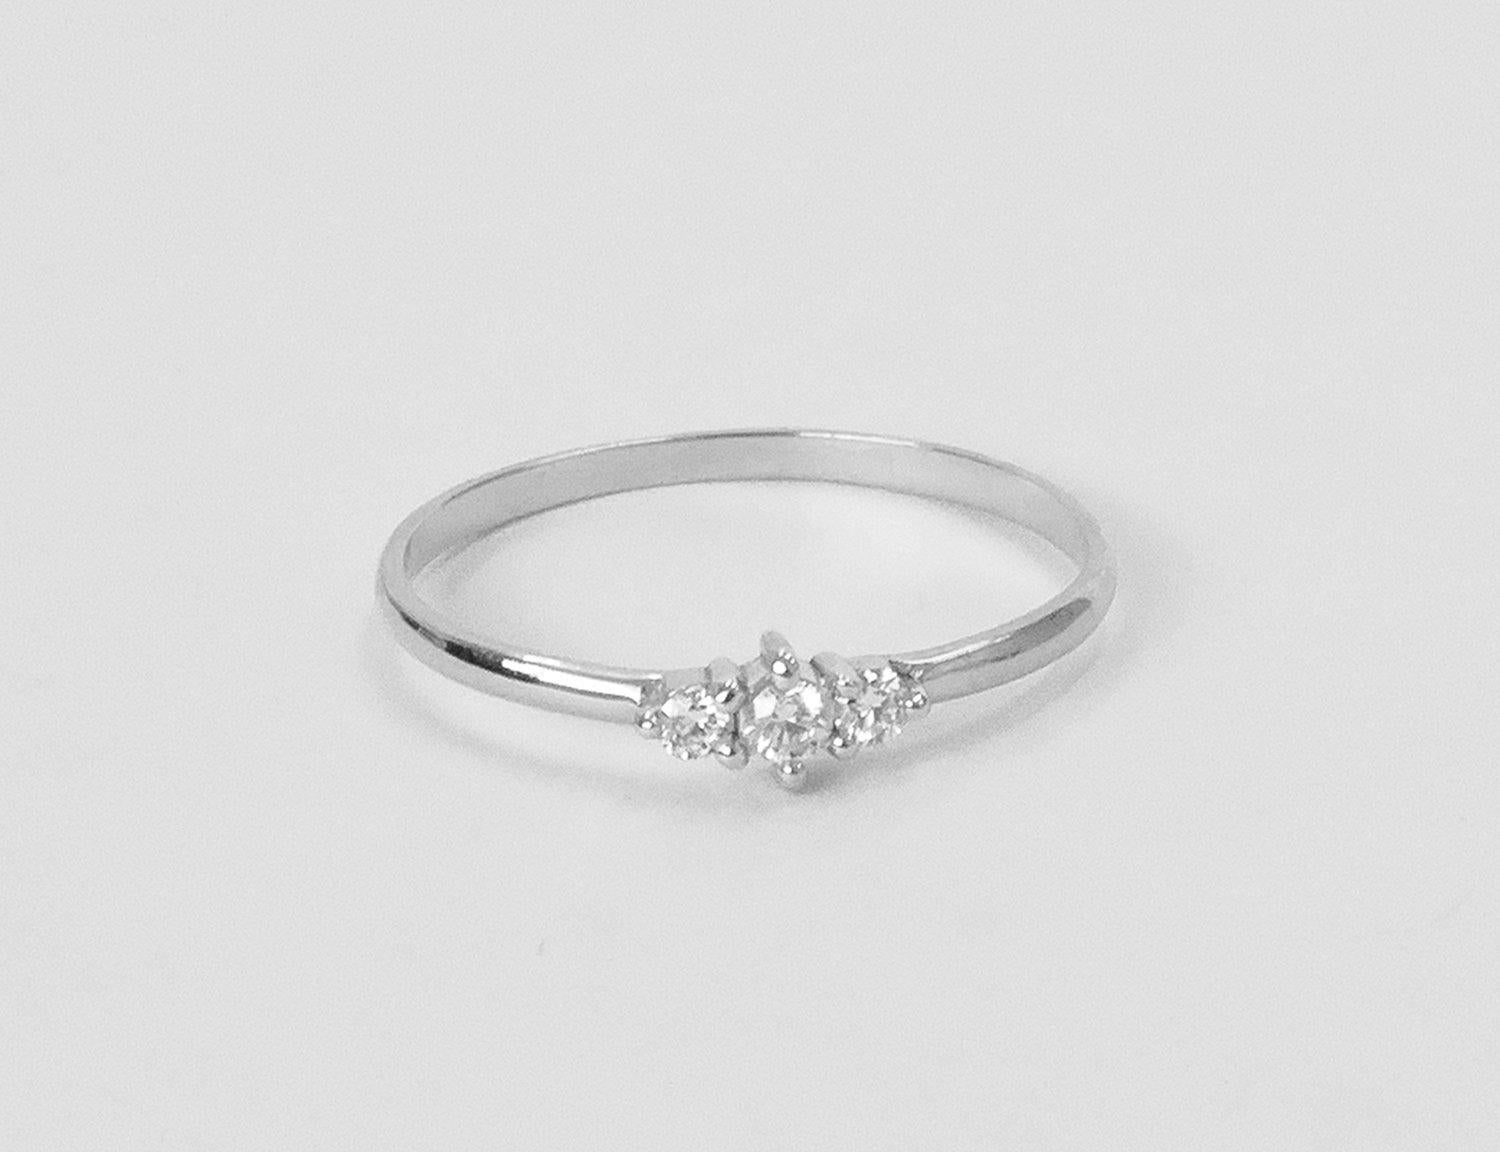 For Sale:  18k Gold Three Stone Diamond Engagement Ring Trio Diamond Ring 5